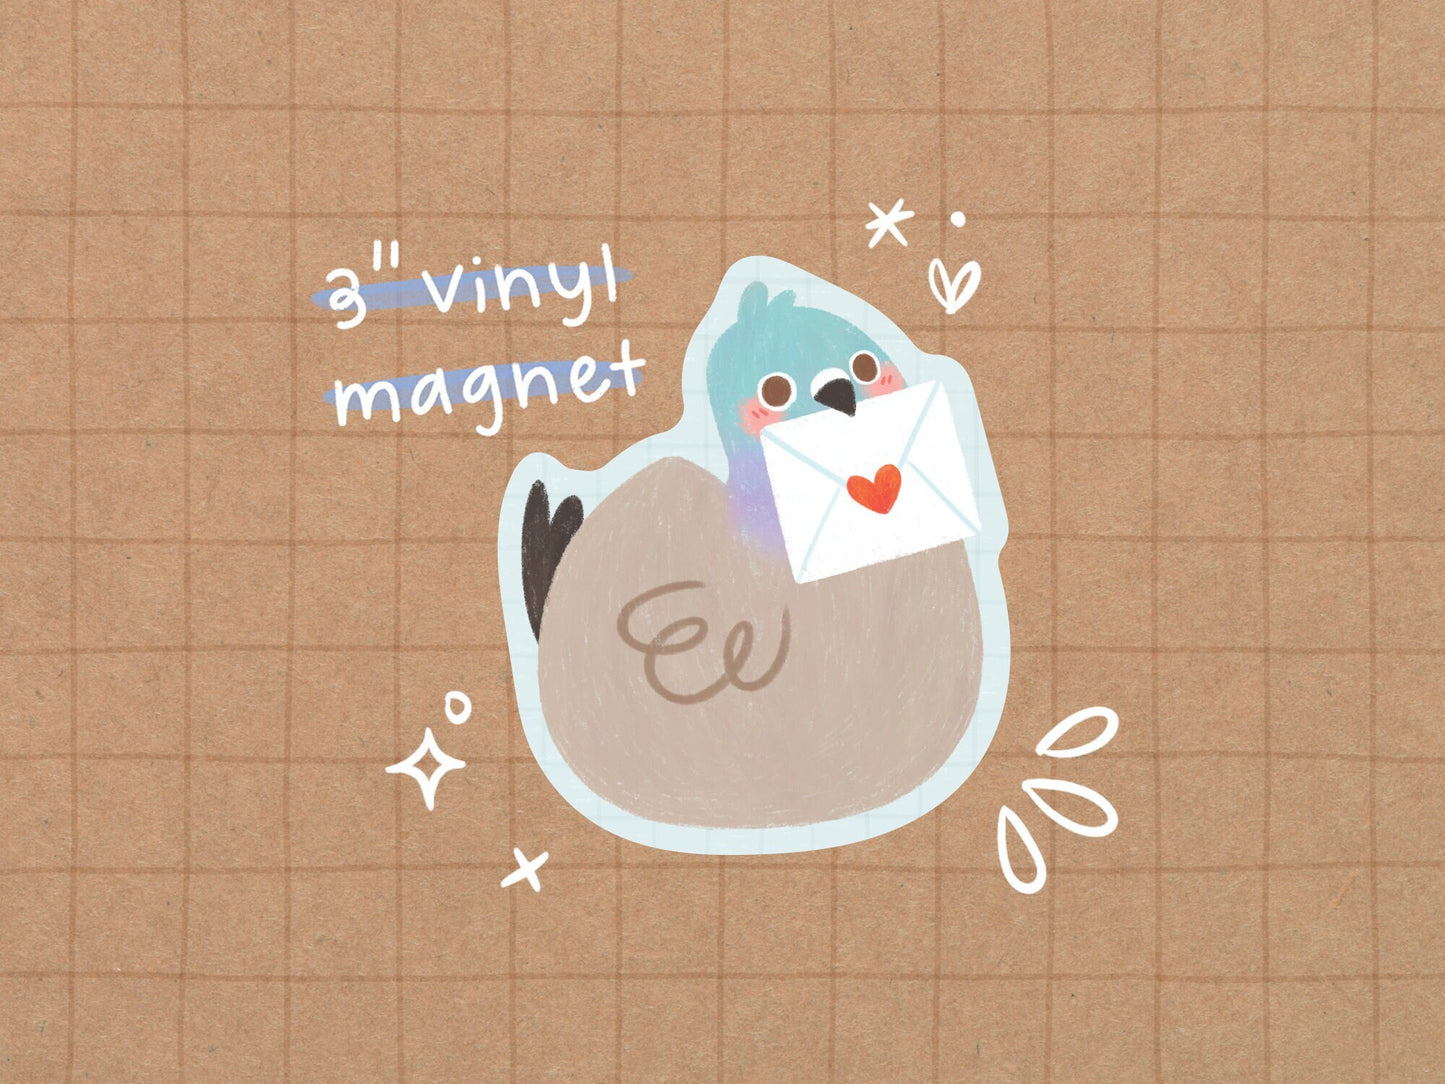 Pigeon Mail Vinyl Magnet